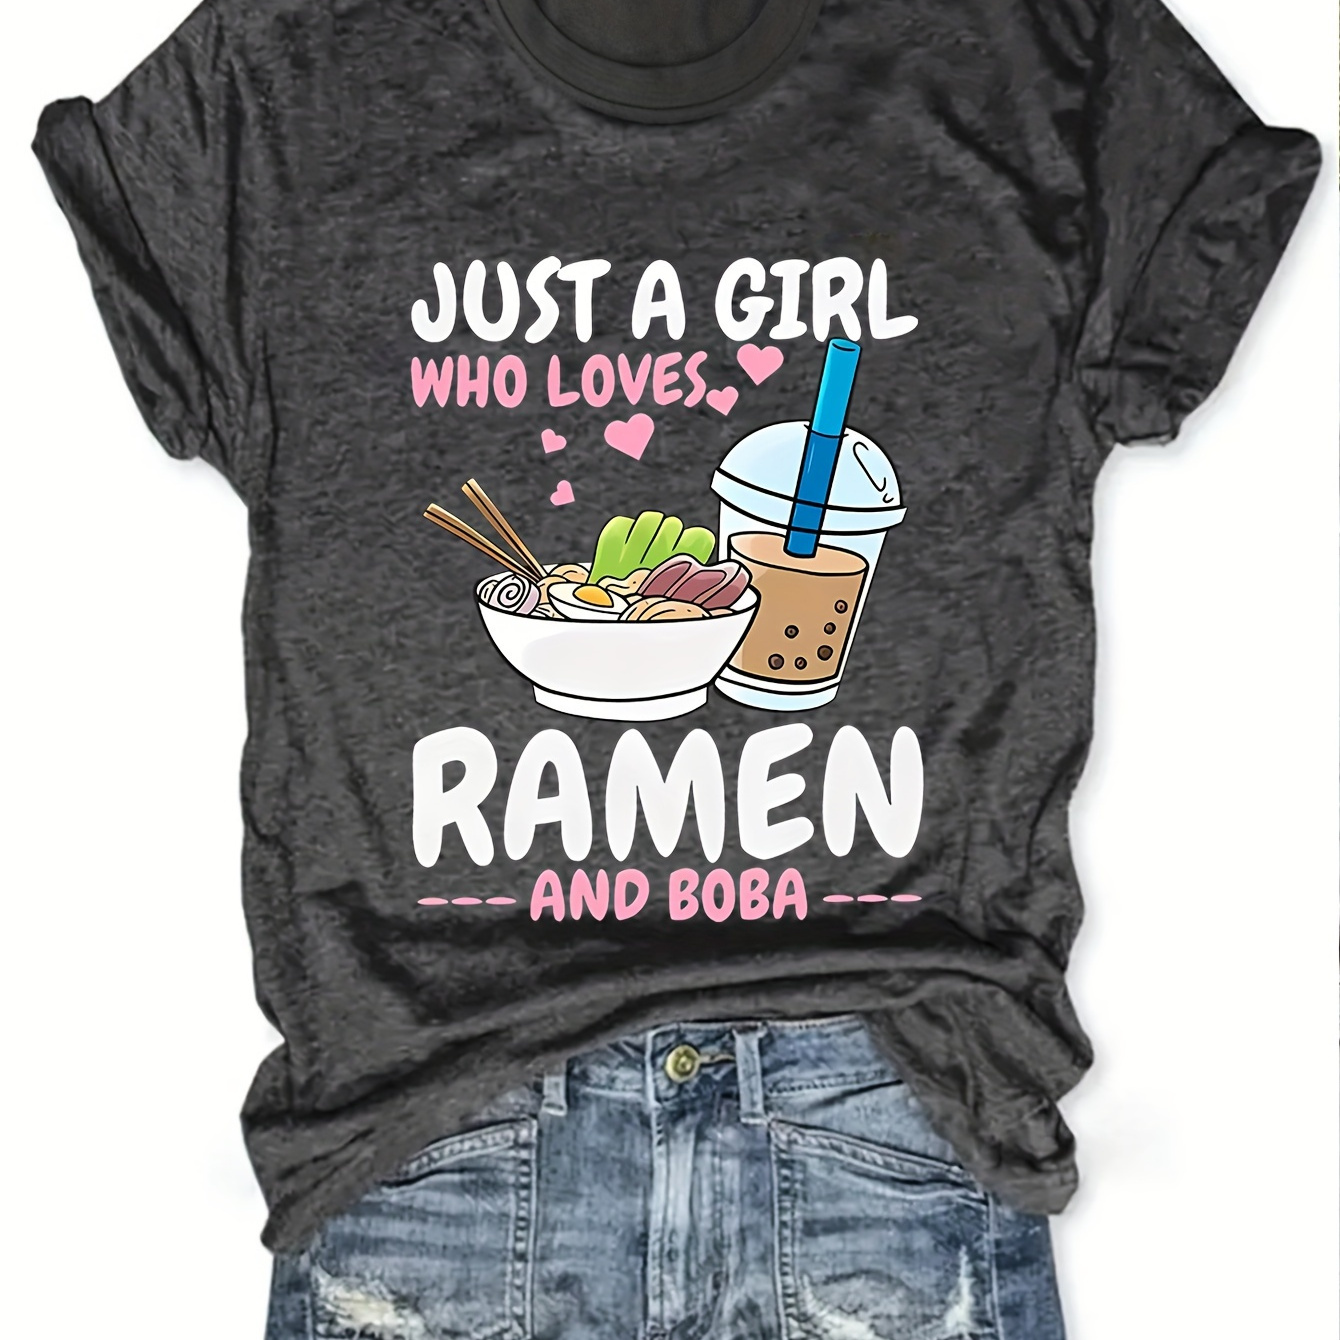 

Ramen Print Crew Neck T-shirt, Casual Short Sleeve Top For Spring & Summer, Women's Clothing